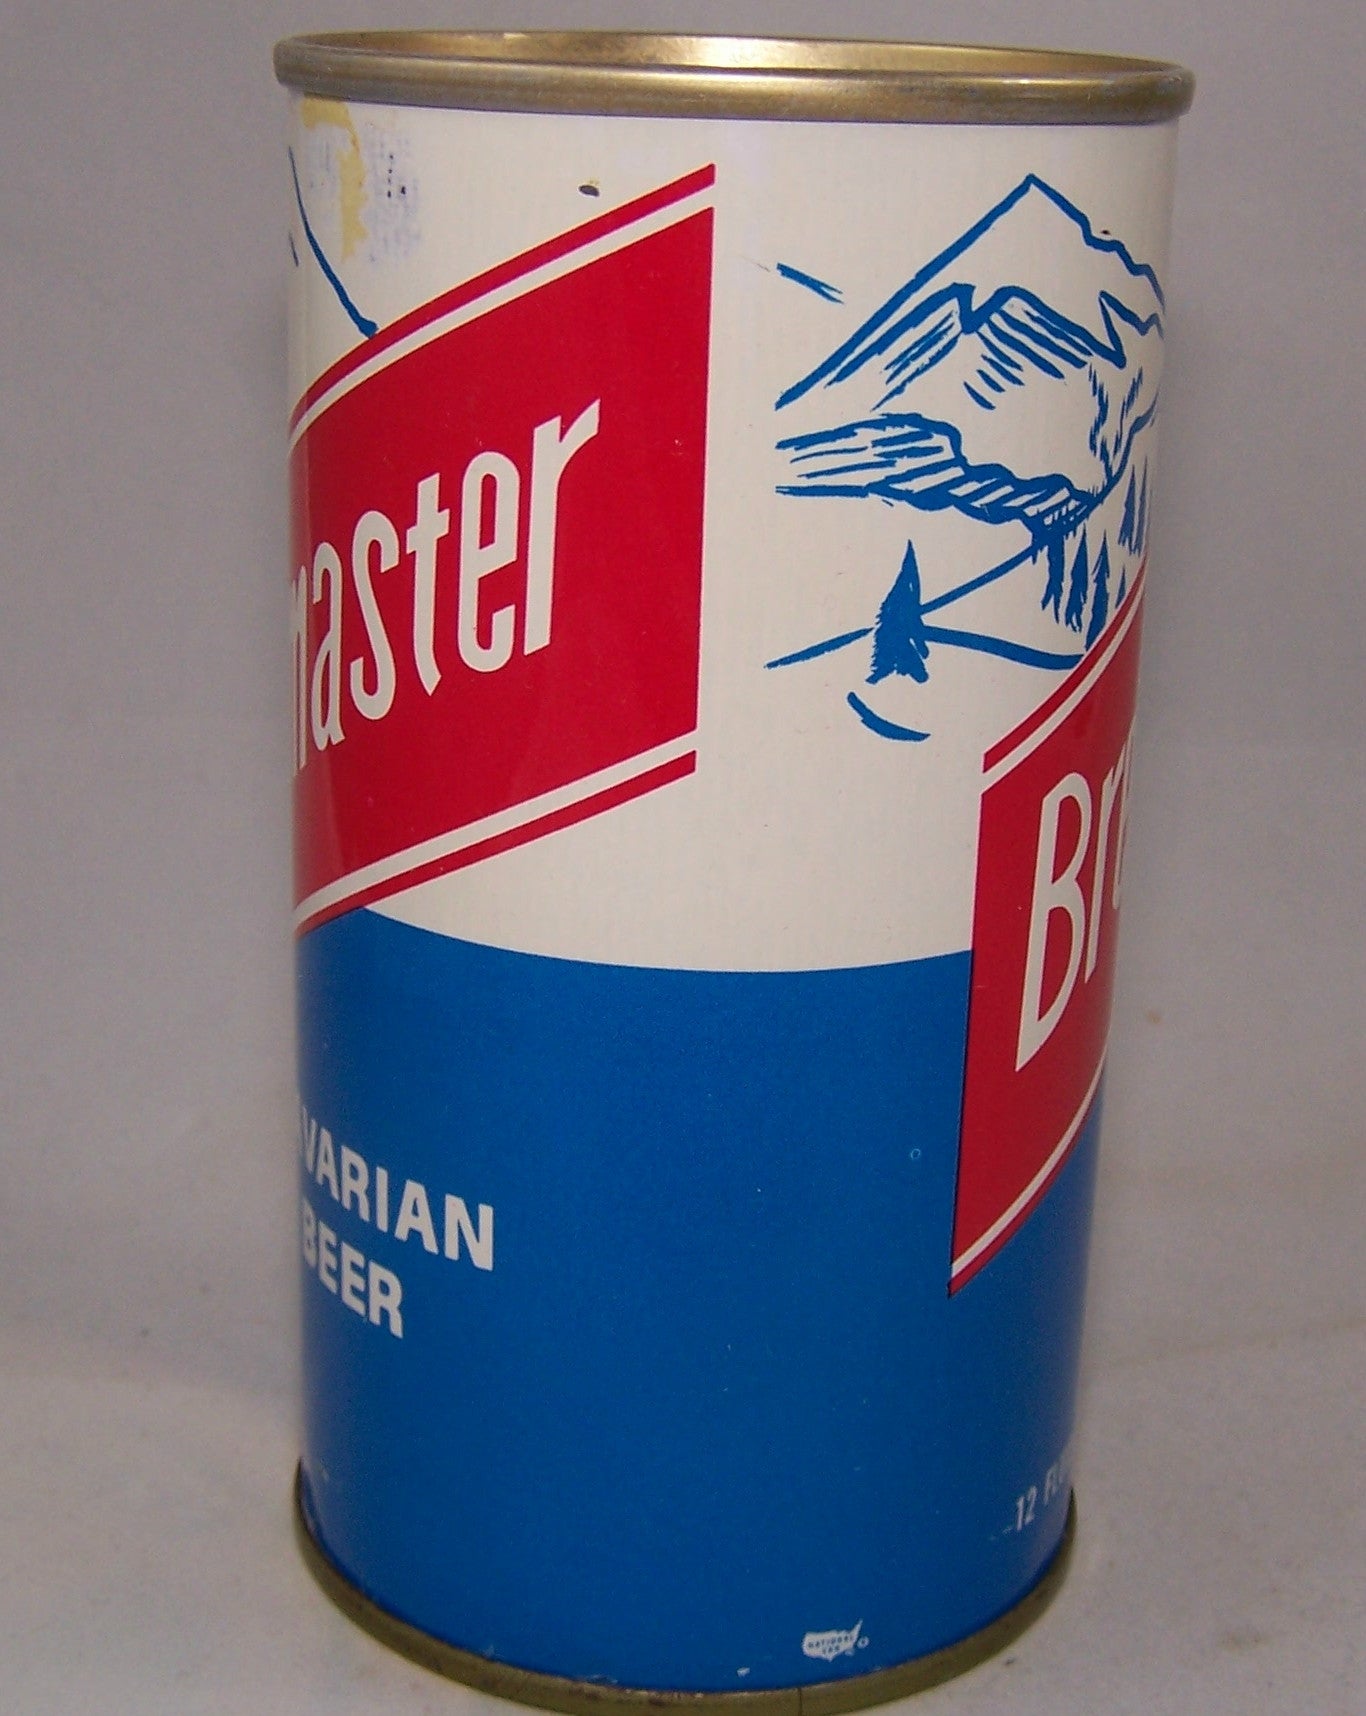 Brewmaster Bavarian Beer, USBC II 45-35, Grade 1 Sold on 05/15/16